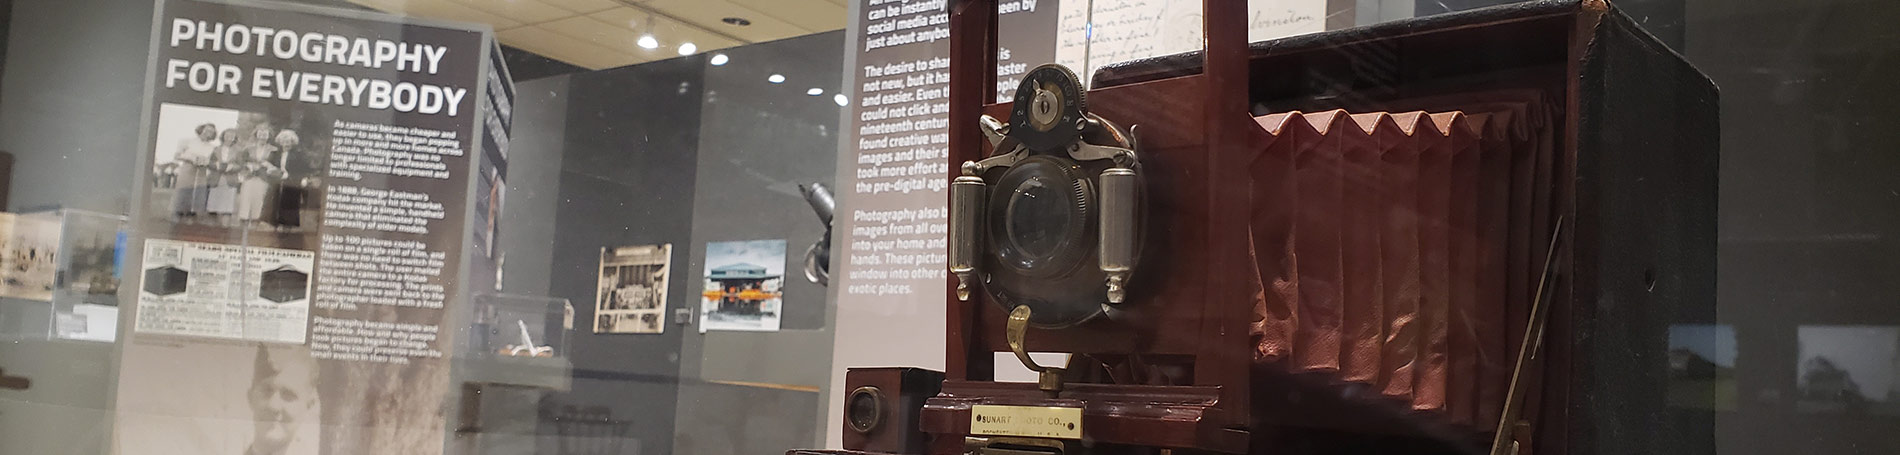 Old camera on display.